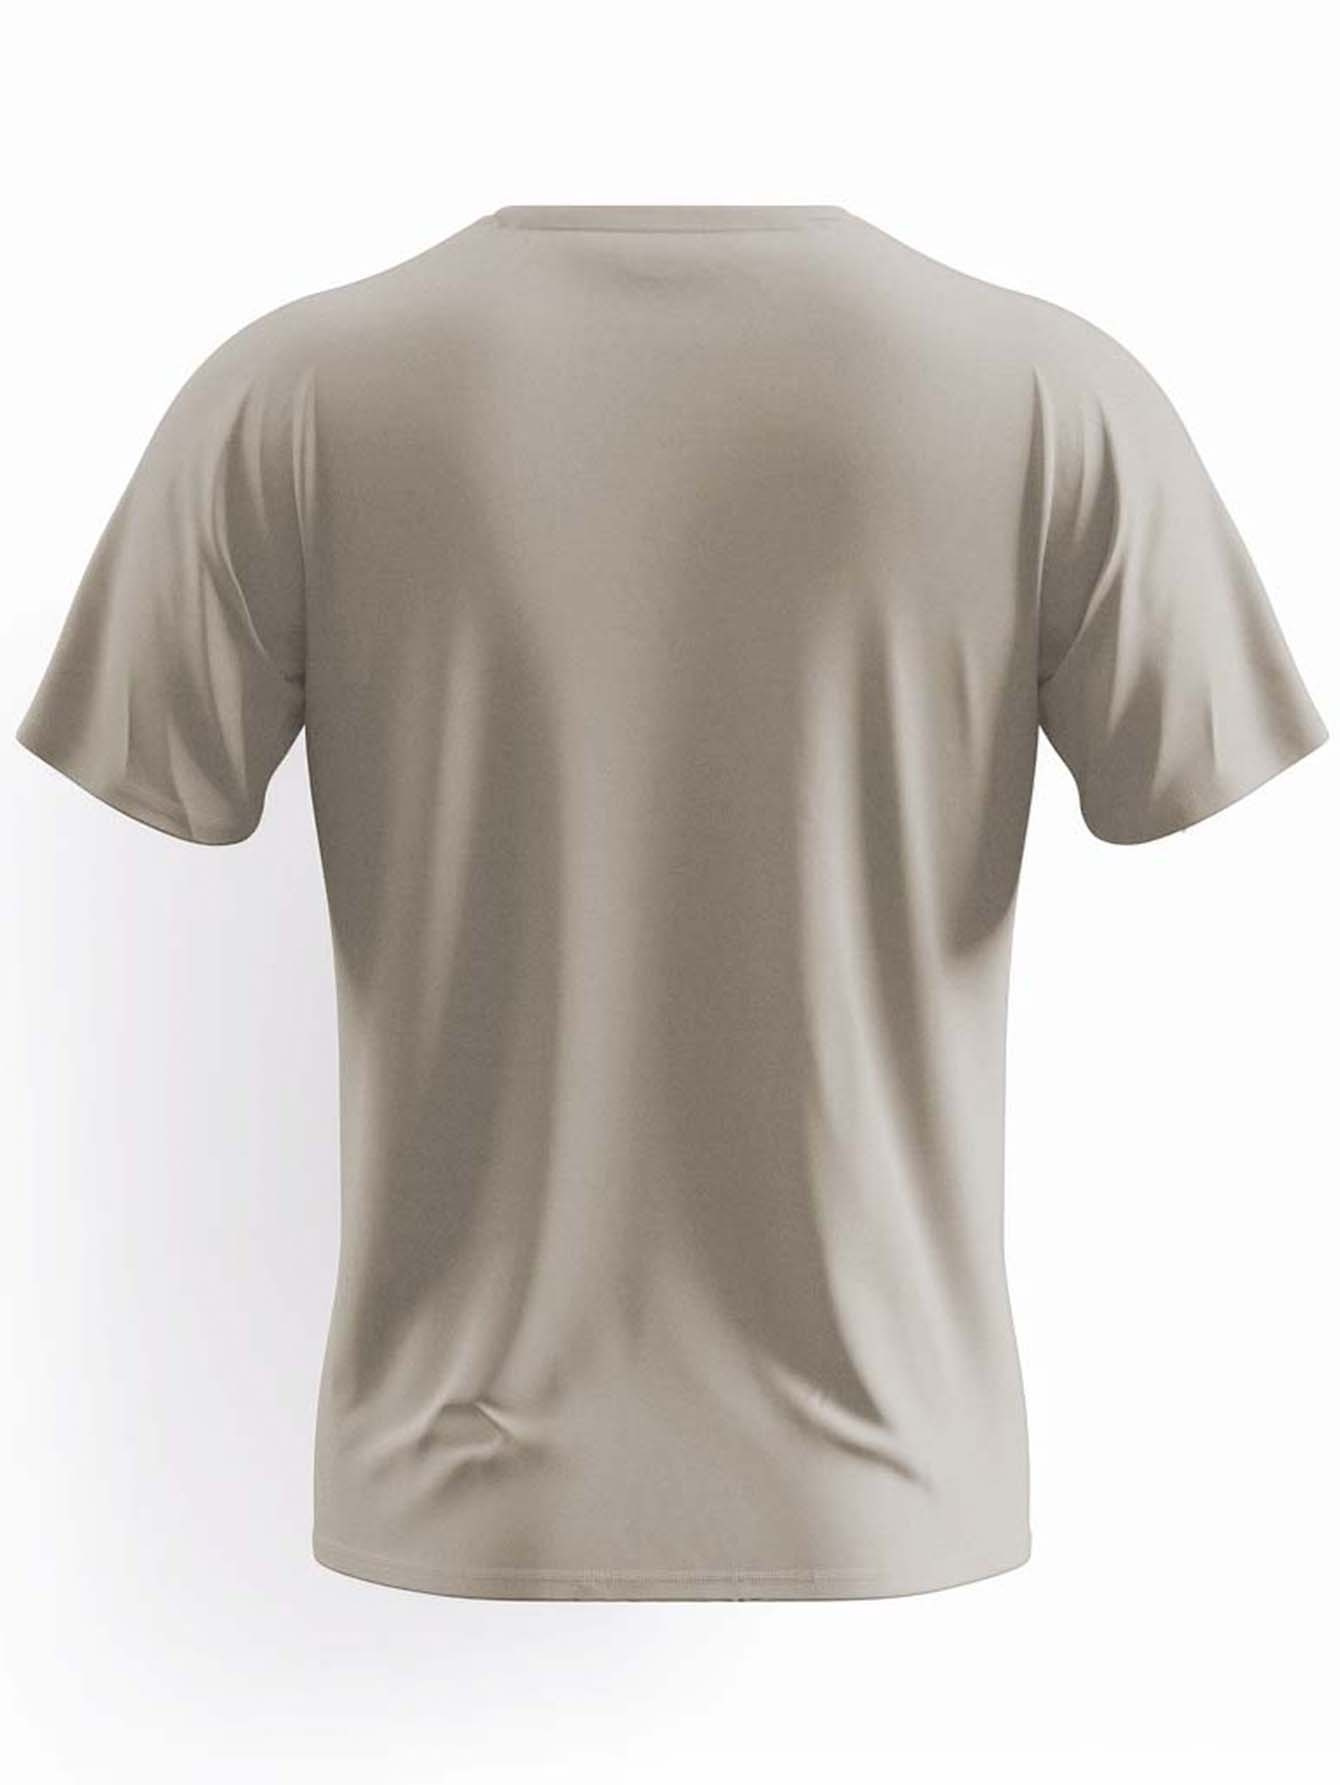  Mens Medium Shirts Men's T Shirt Breathable Short